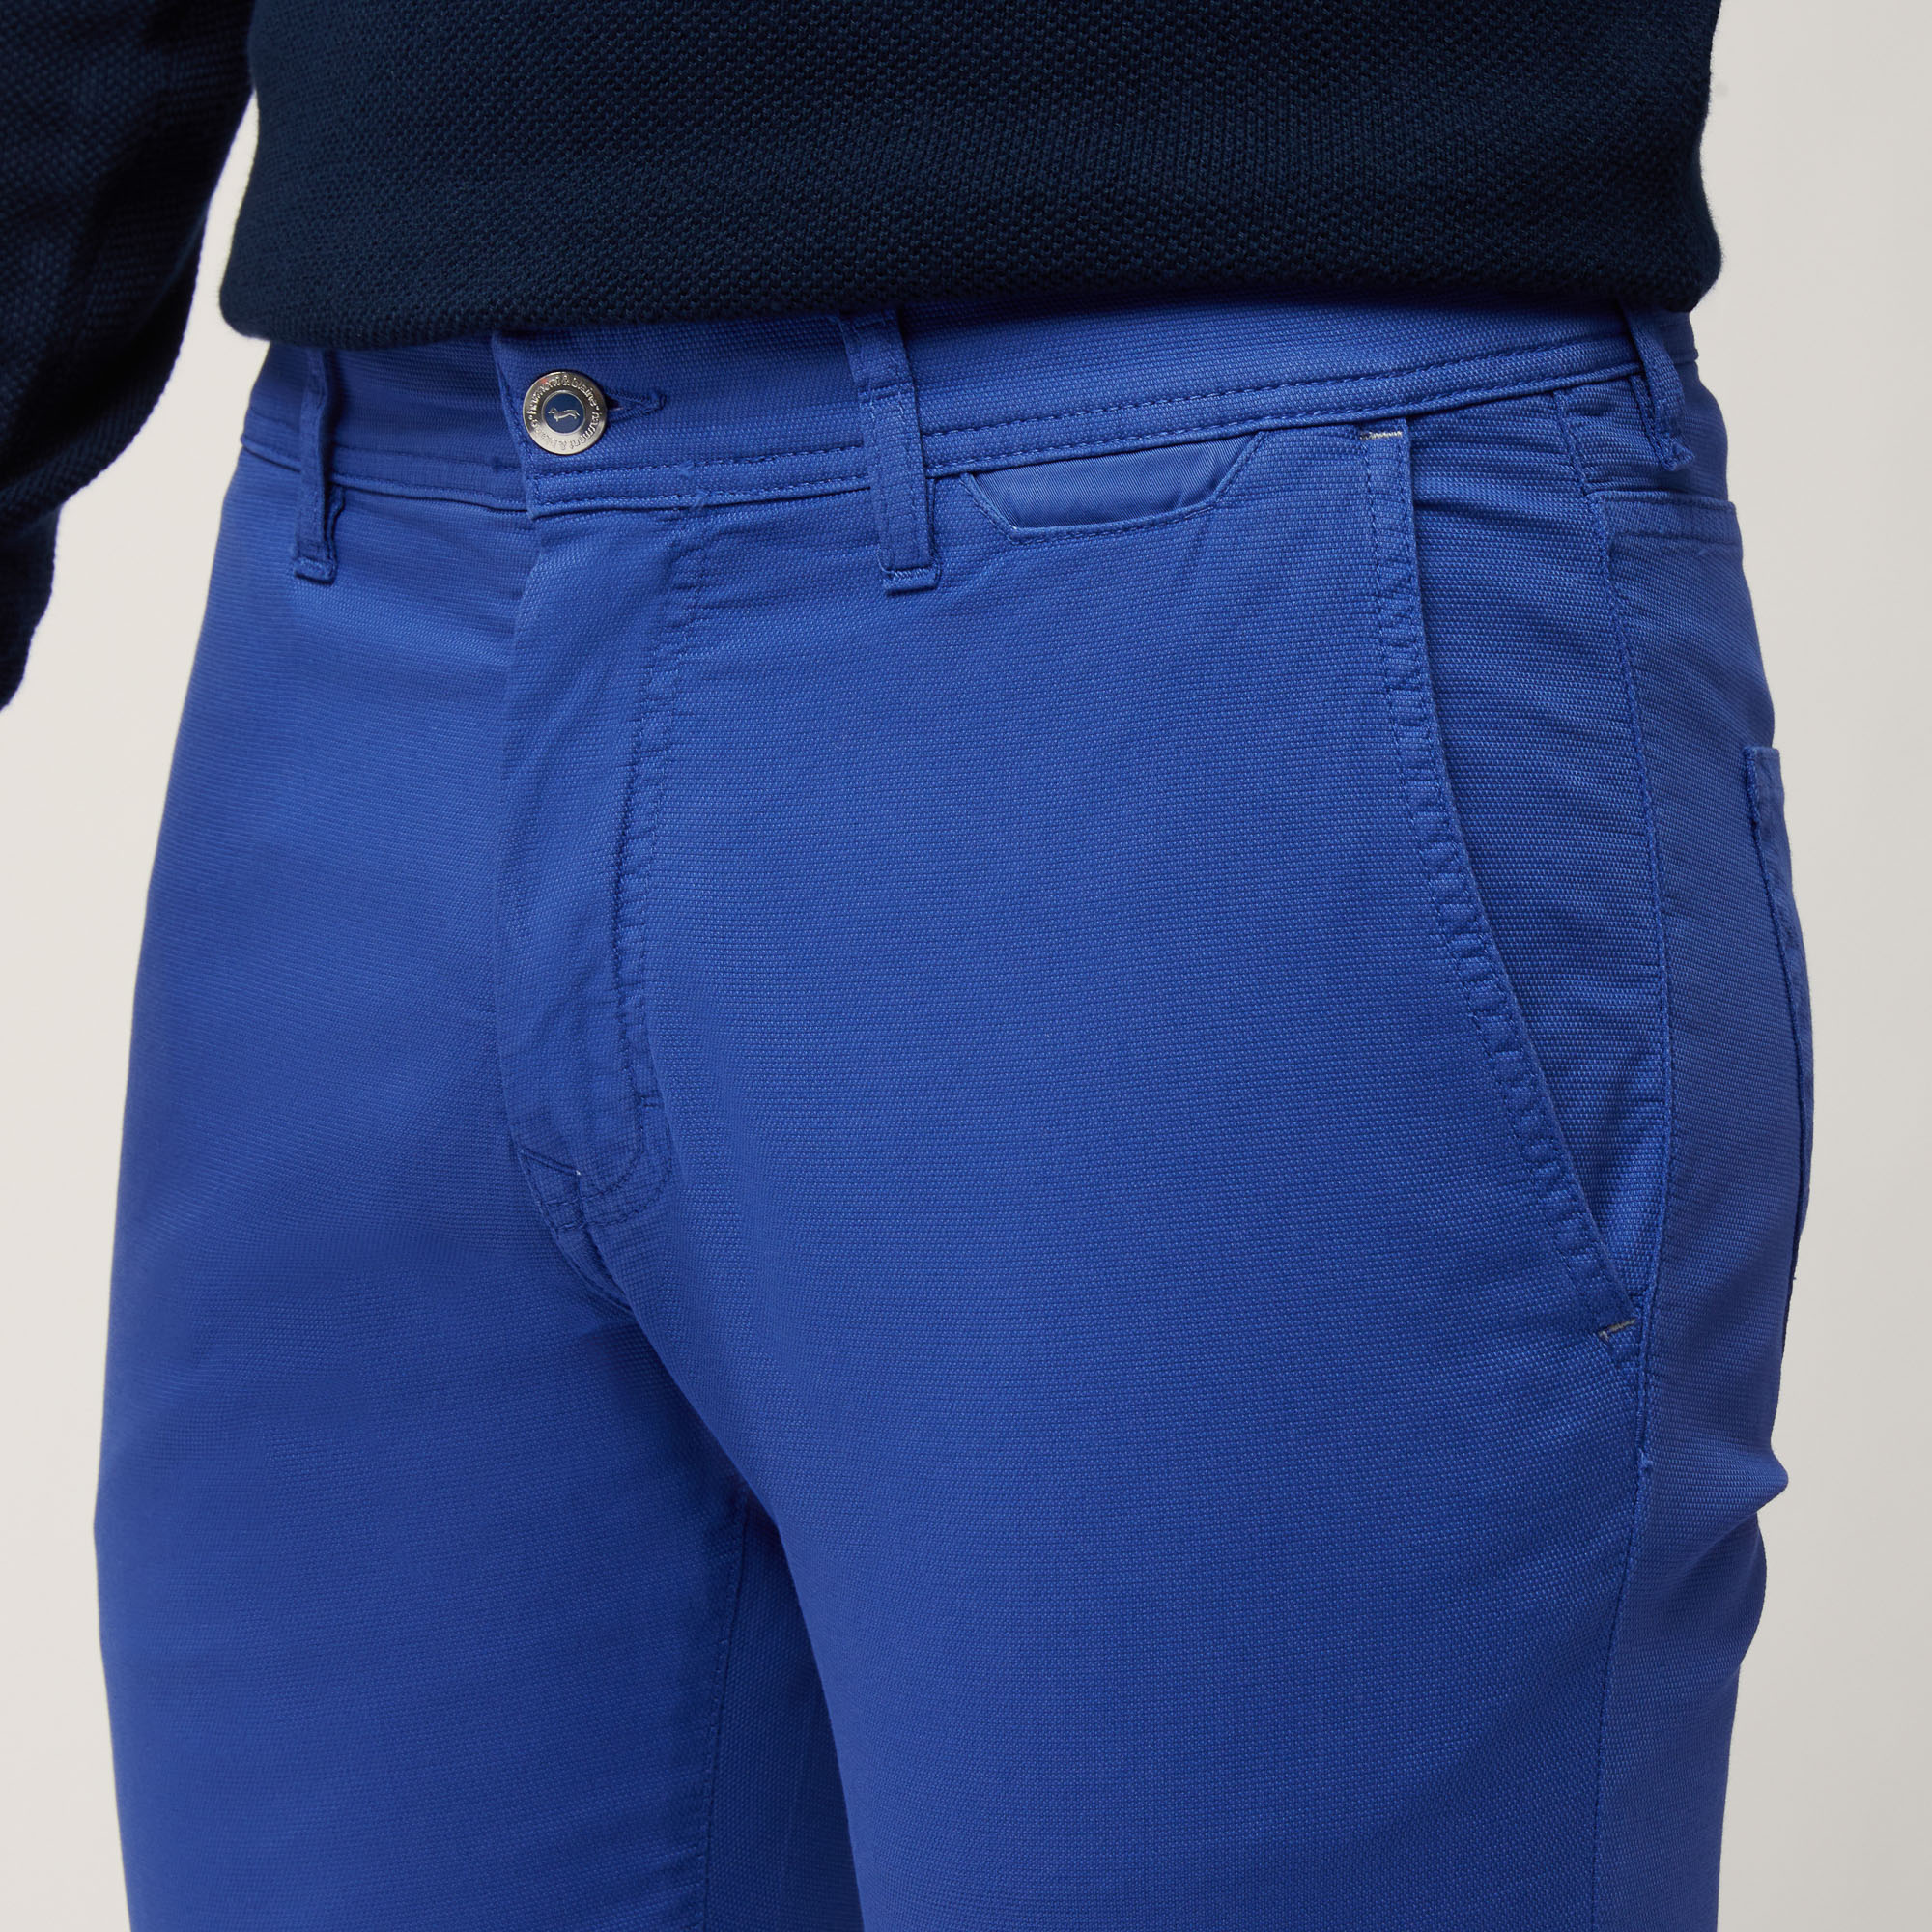 Pantaloni Colorfive, Ortensia, large image number 2